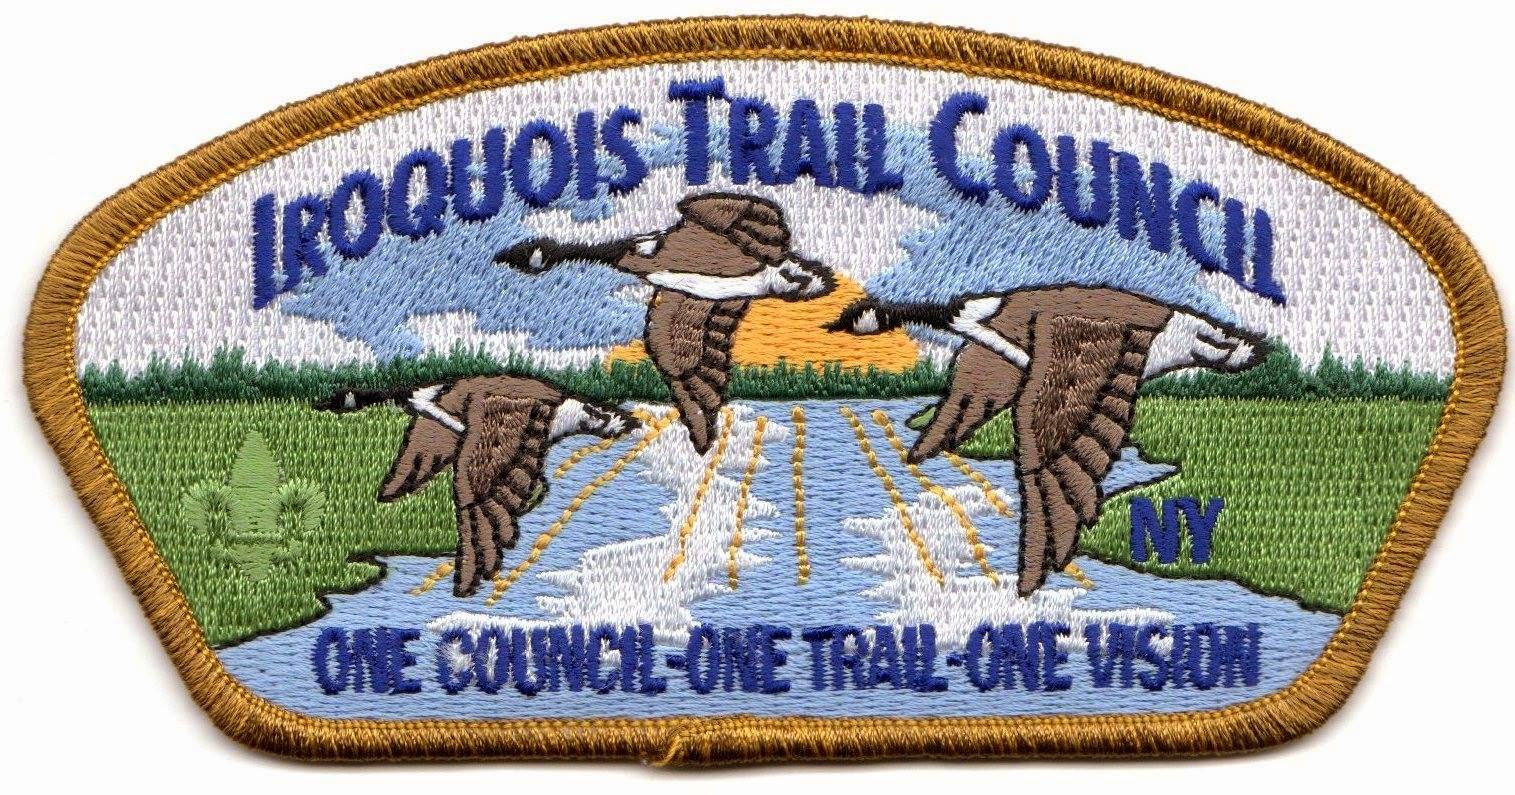 Iroquois Trail Council